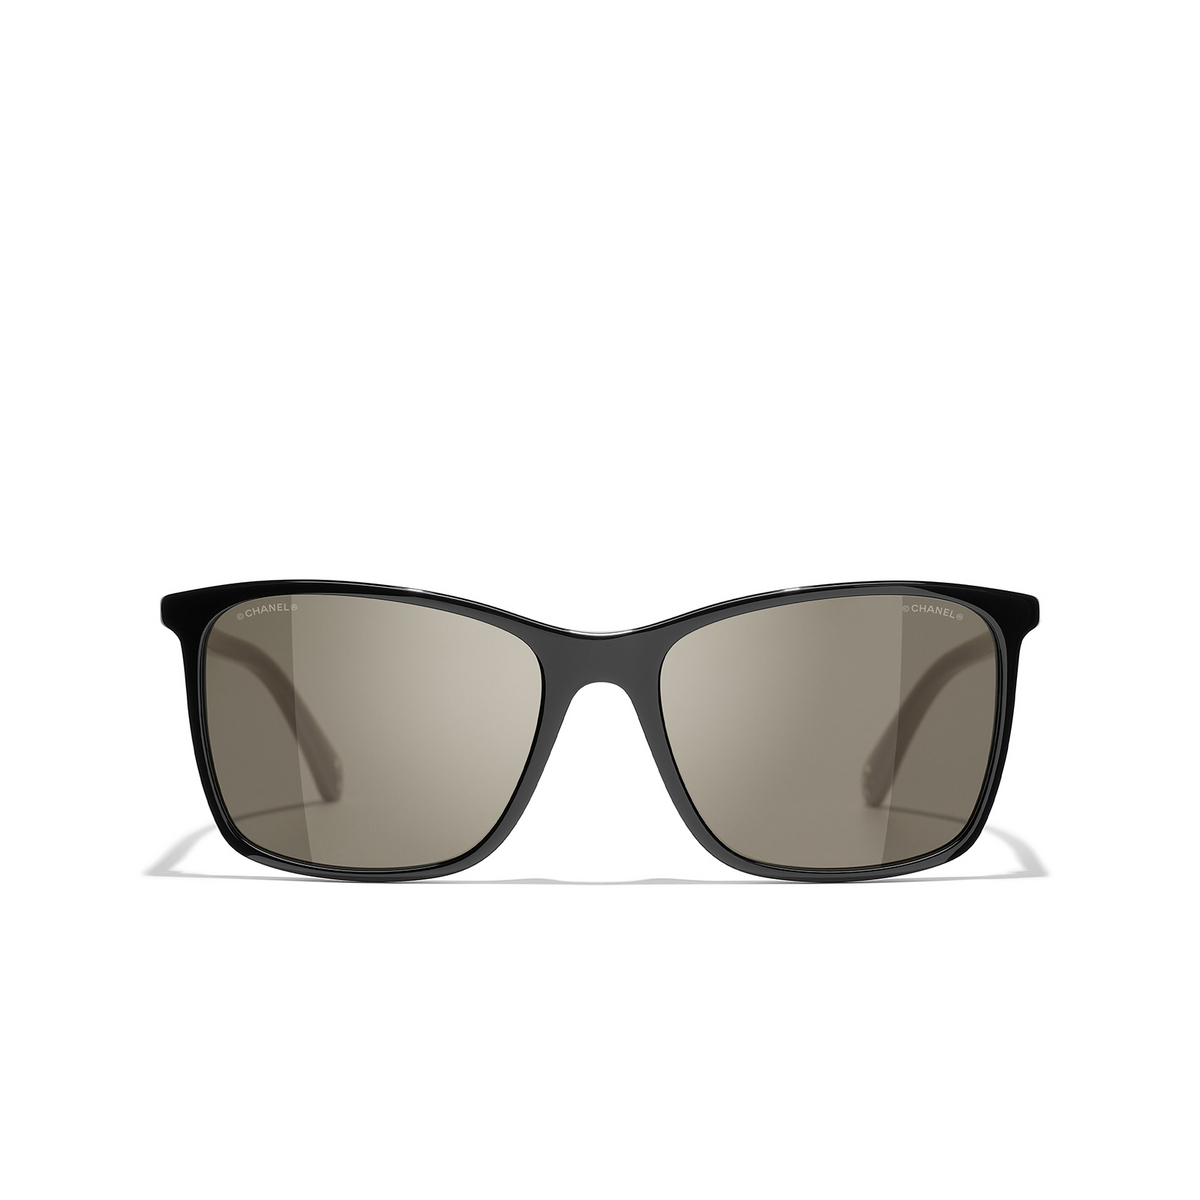 CHANEL square Sunglasses C942/3 Black & Beige - front view